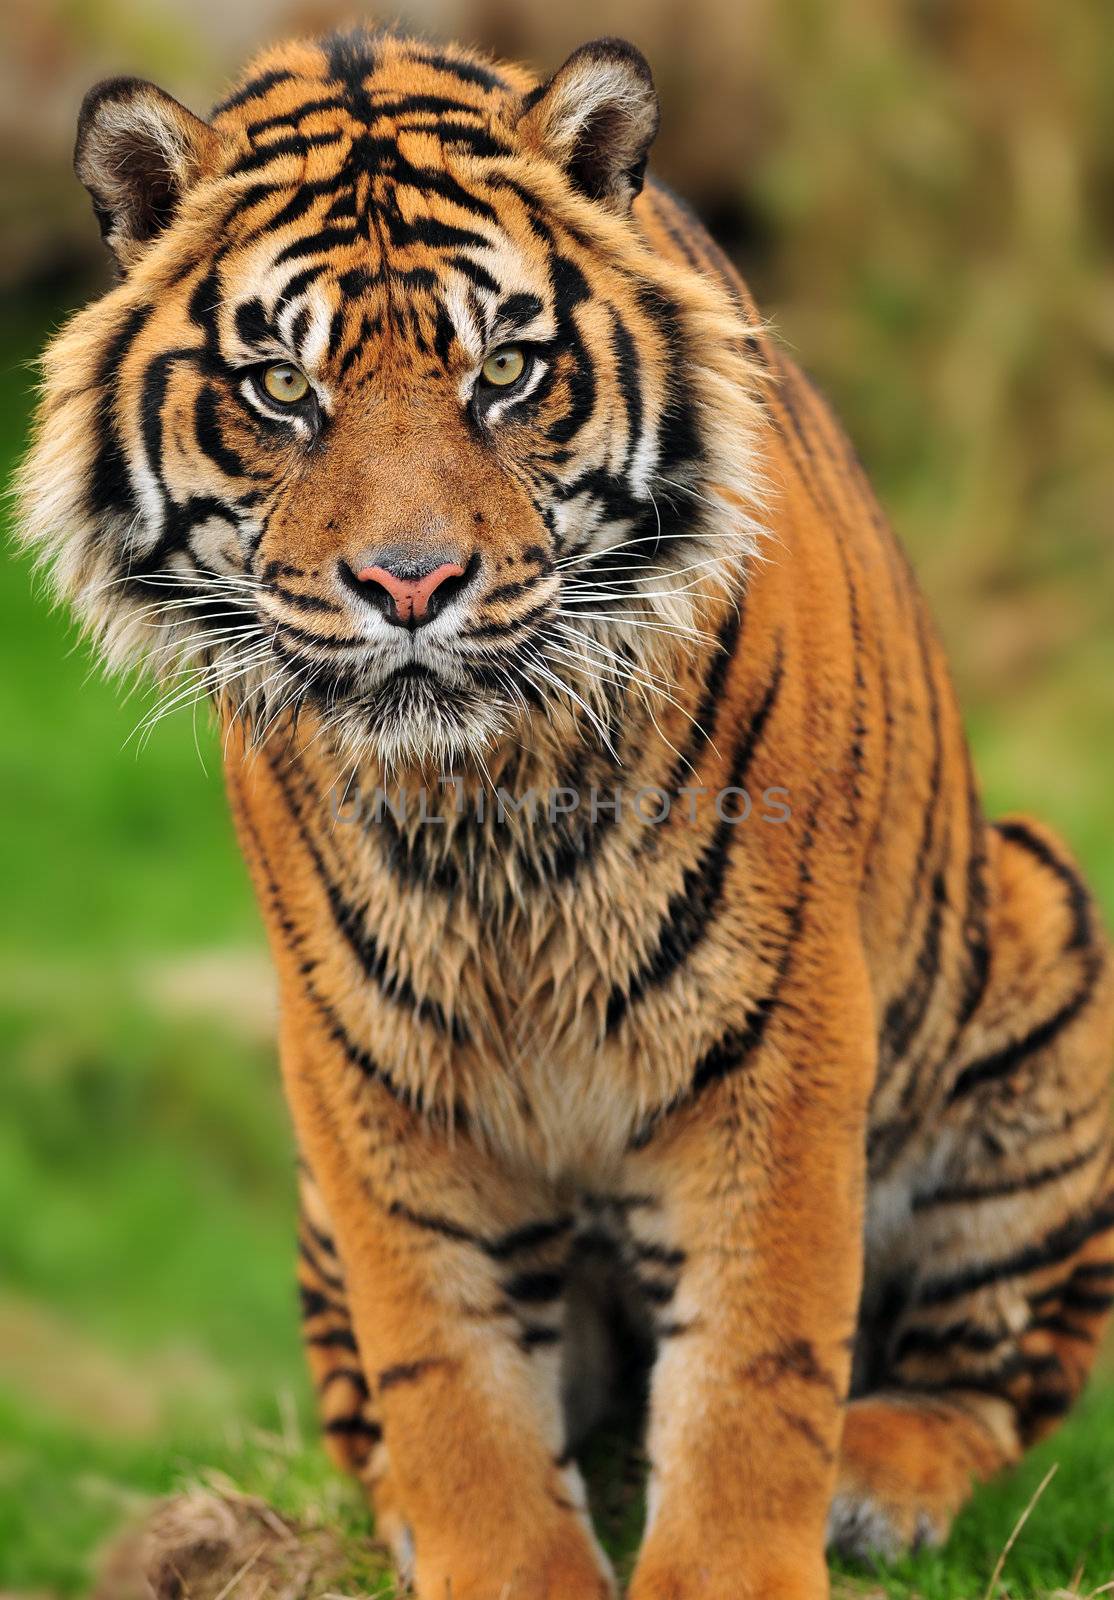 Engangered Sumatran tiger portrait by neelsky